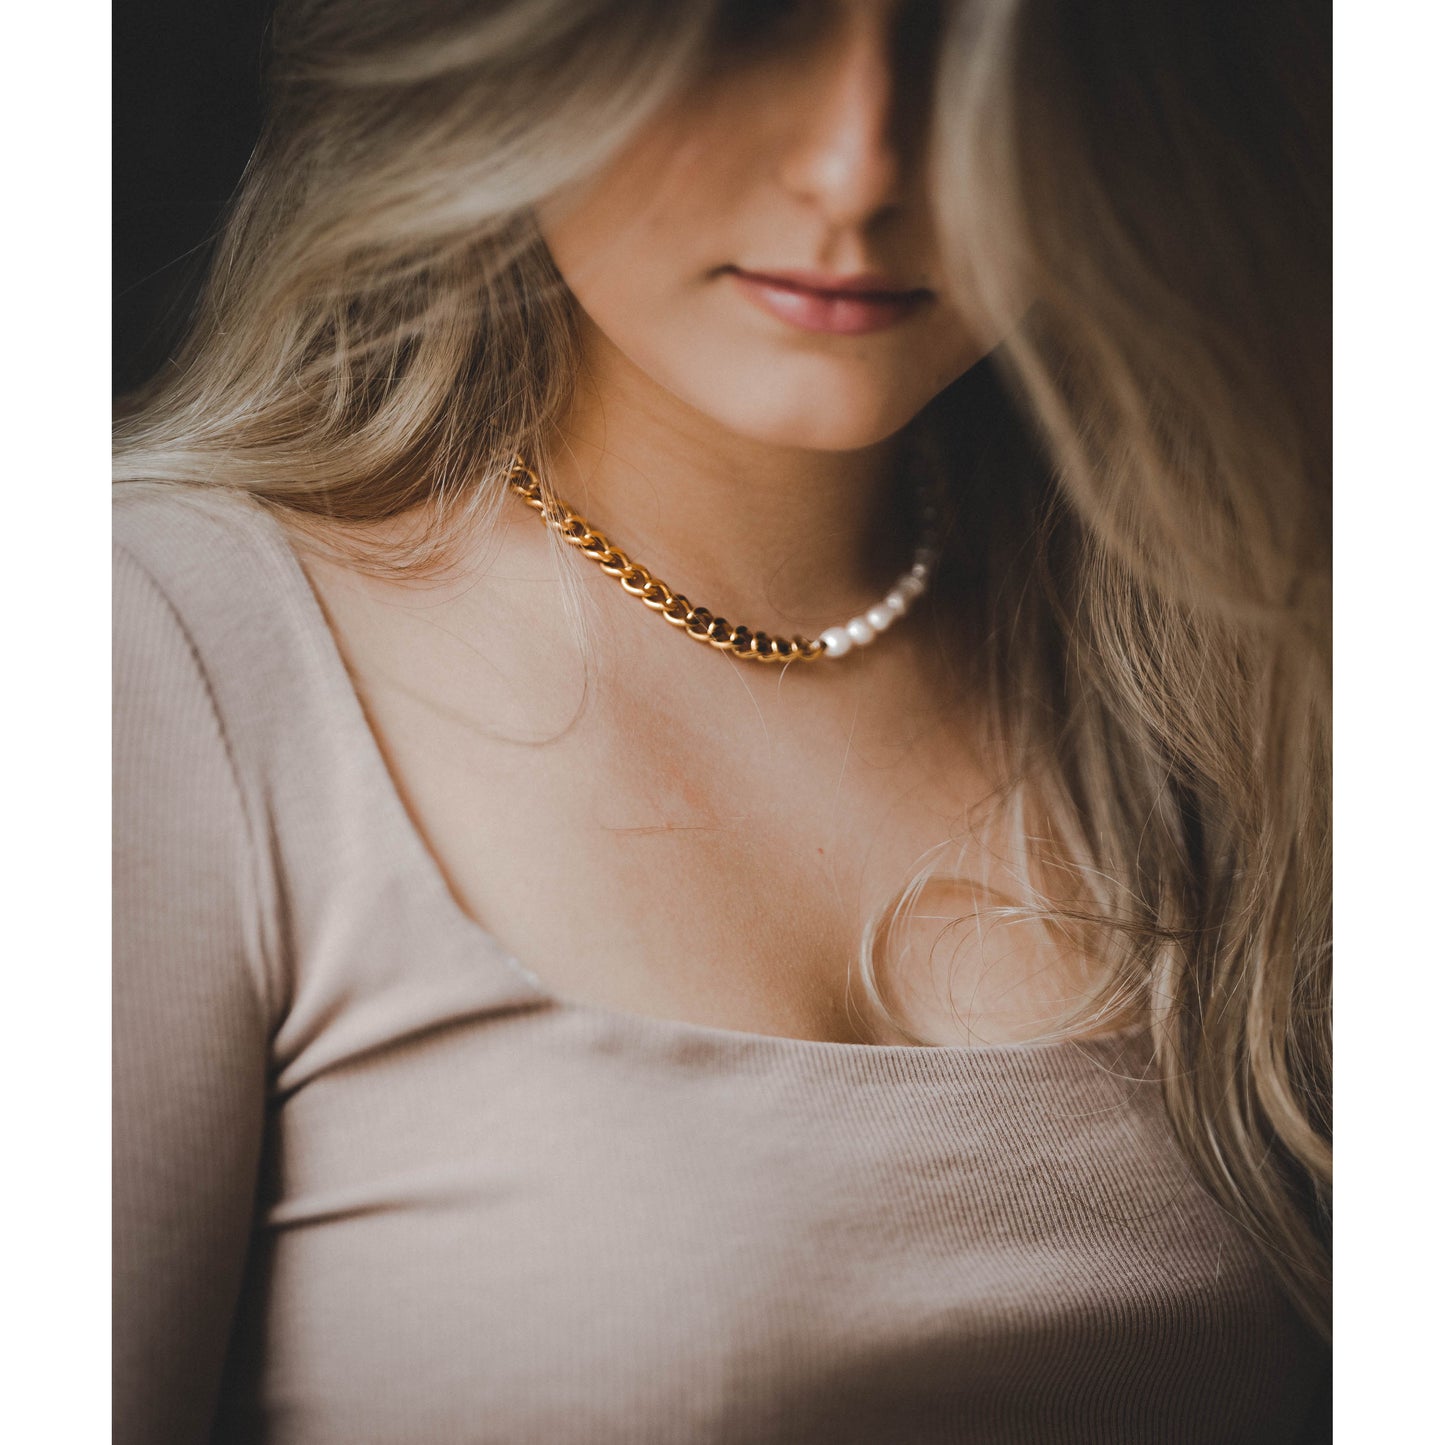 Suna Perlen Kette Halskette Yasemen Store Schmuck Accessoires Ketten Stainless Steel Edelstahl Silver 18K Vergoldet Gold jewel jewelry necklaces